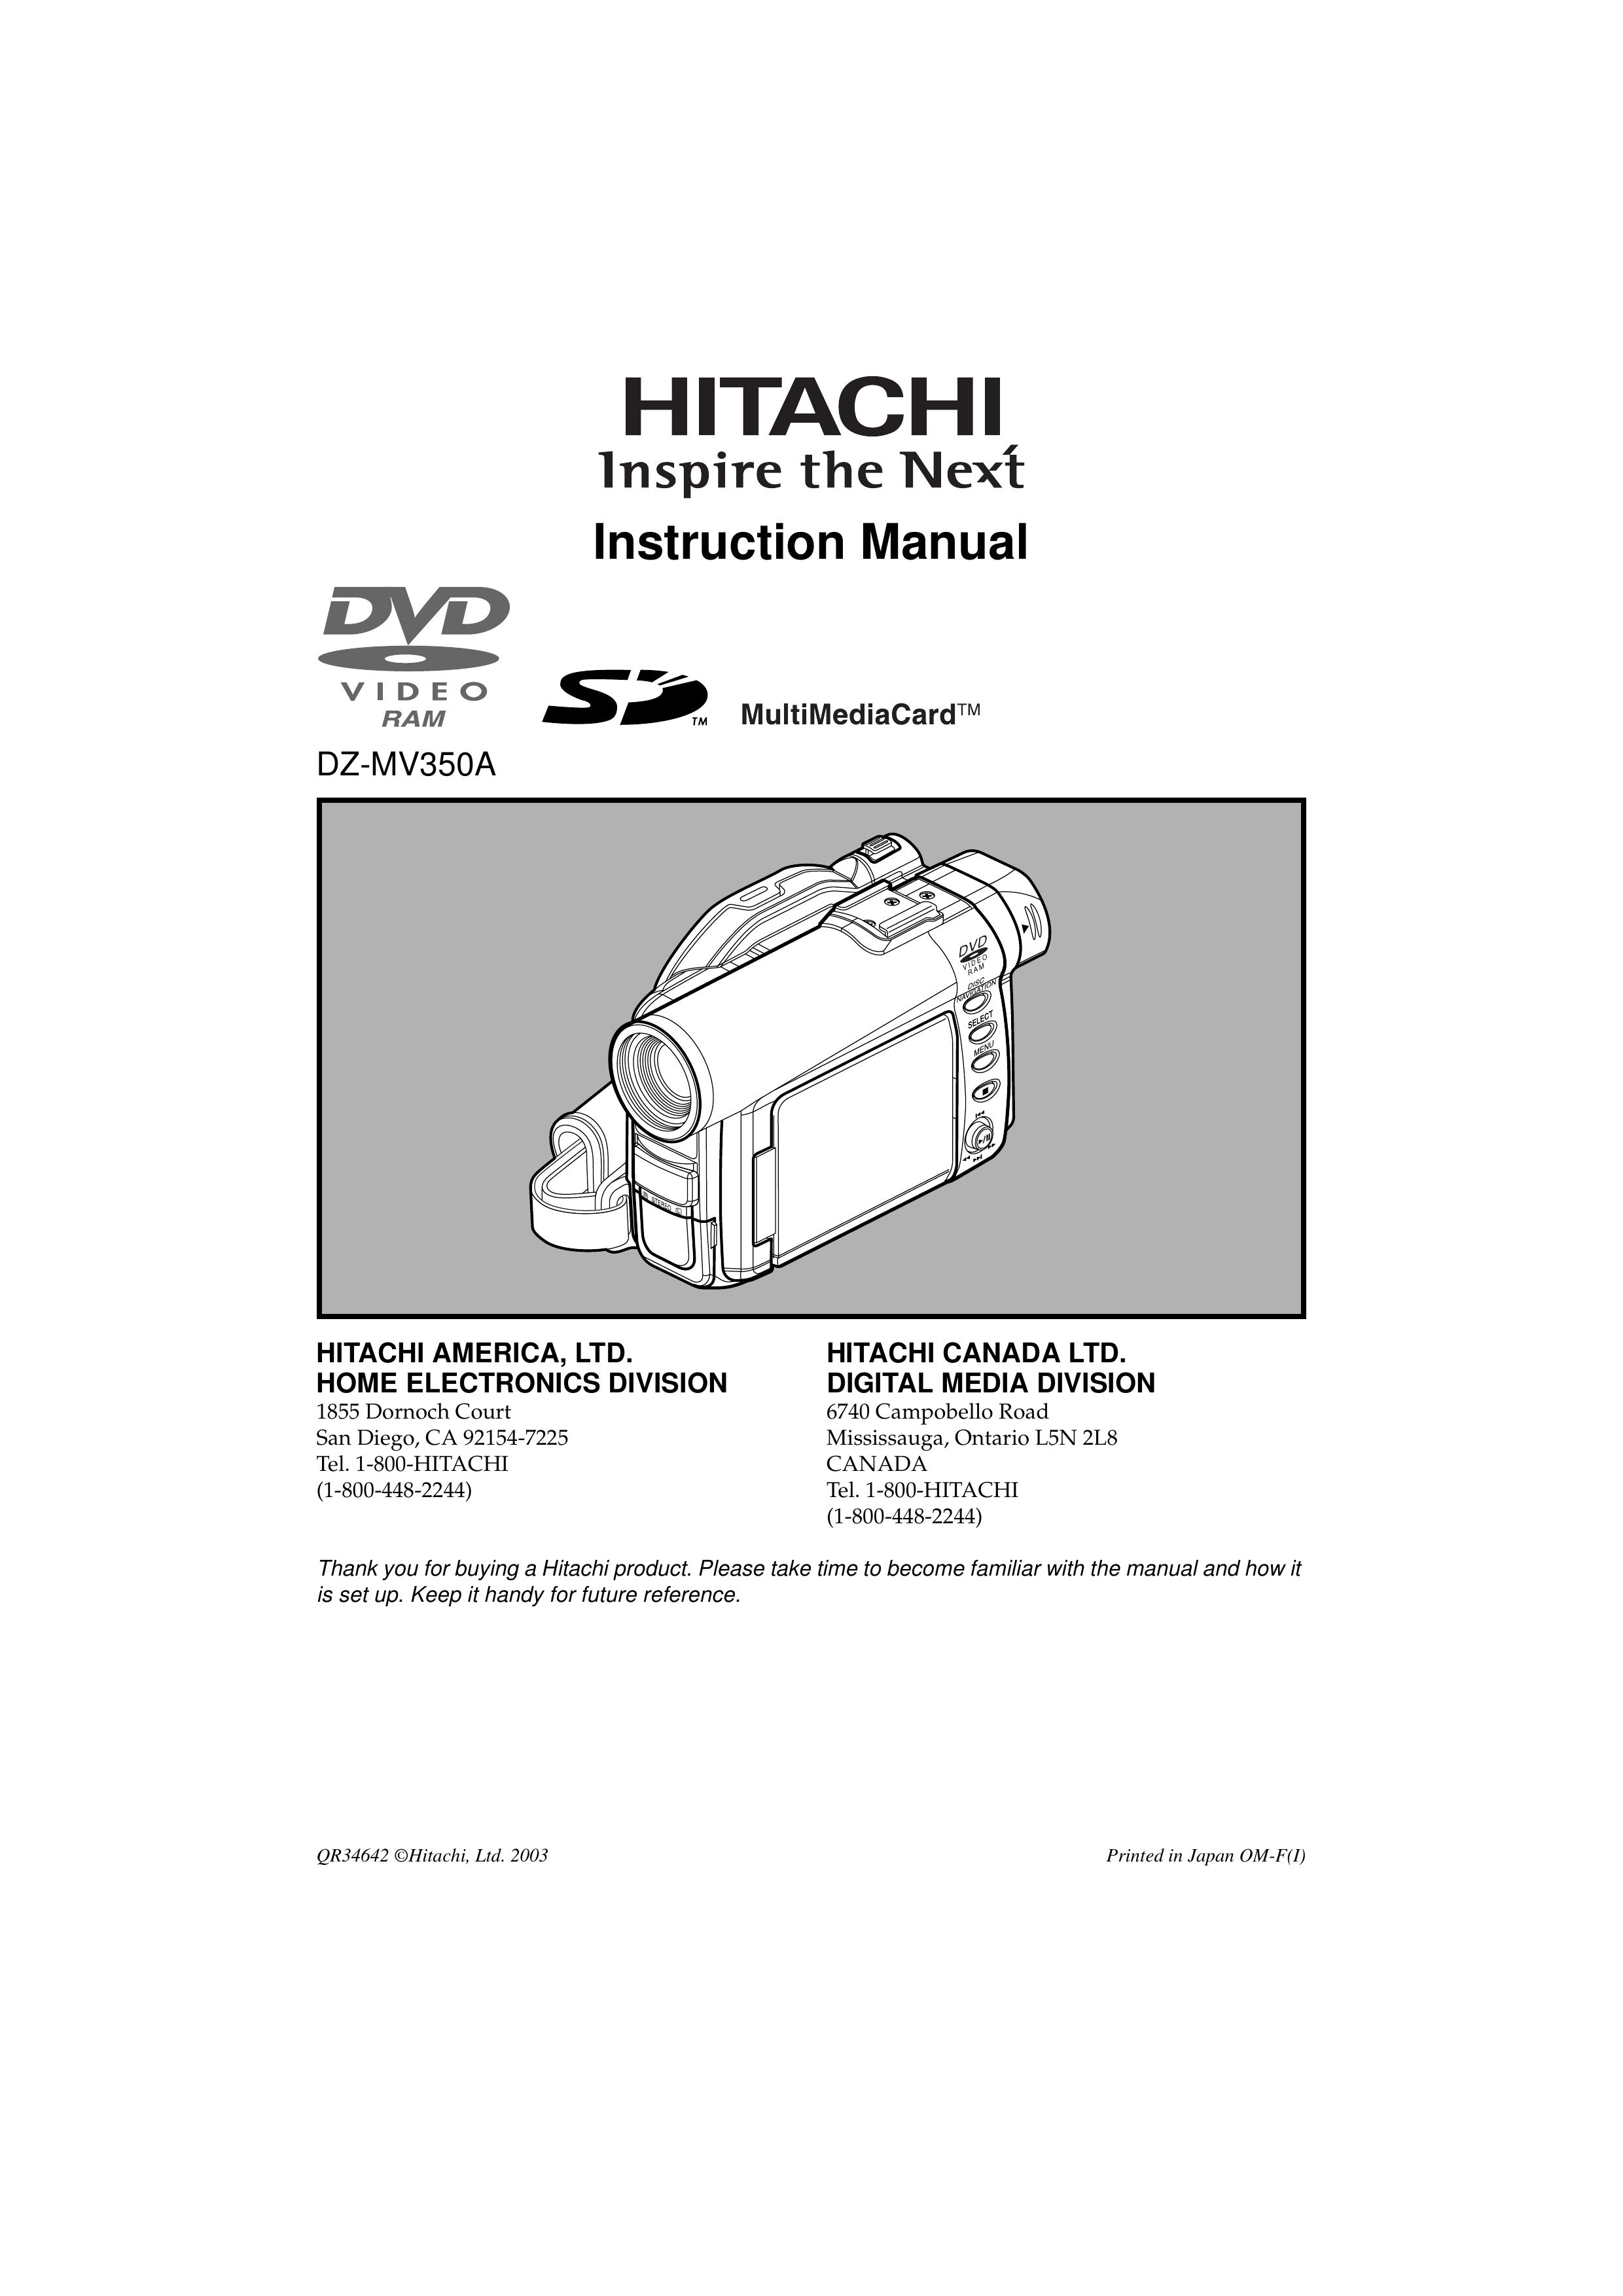 Hitachi DZMV350A Camcorder User Manual